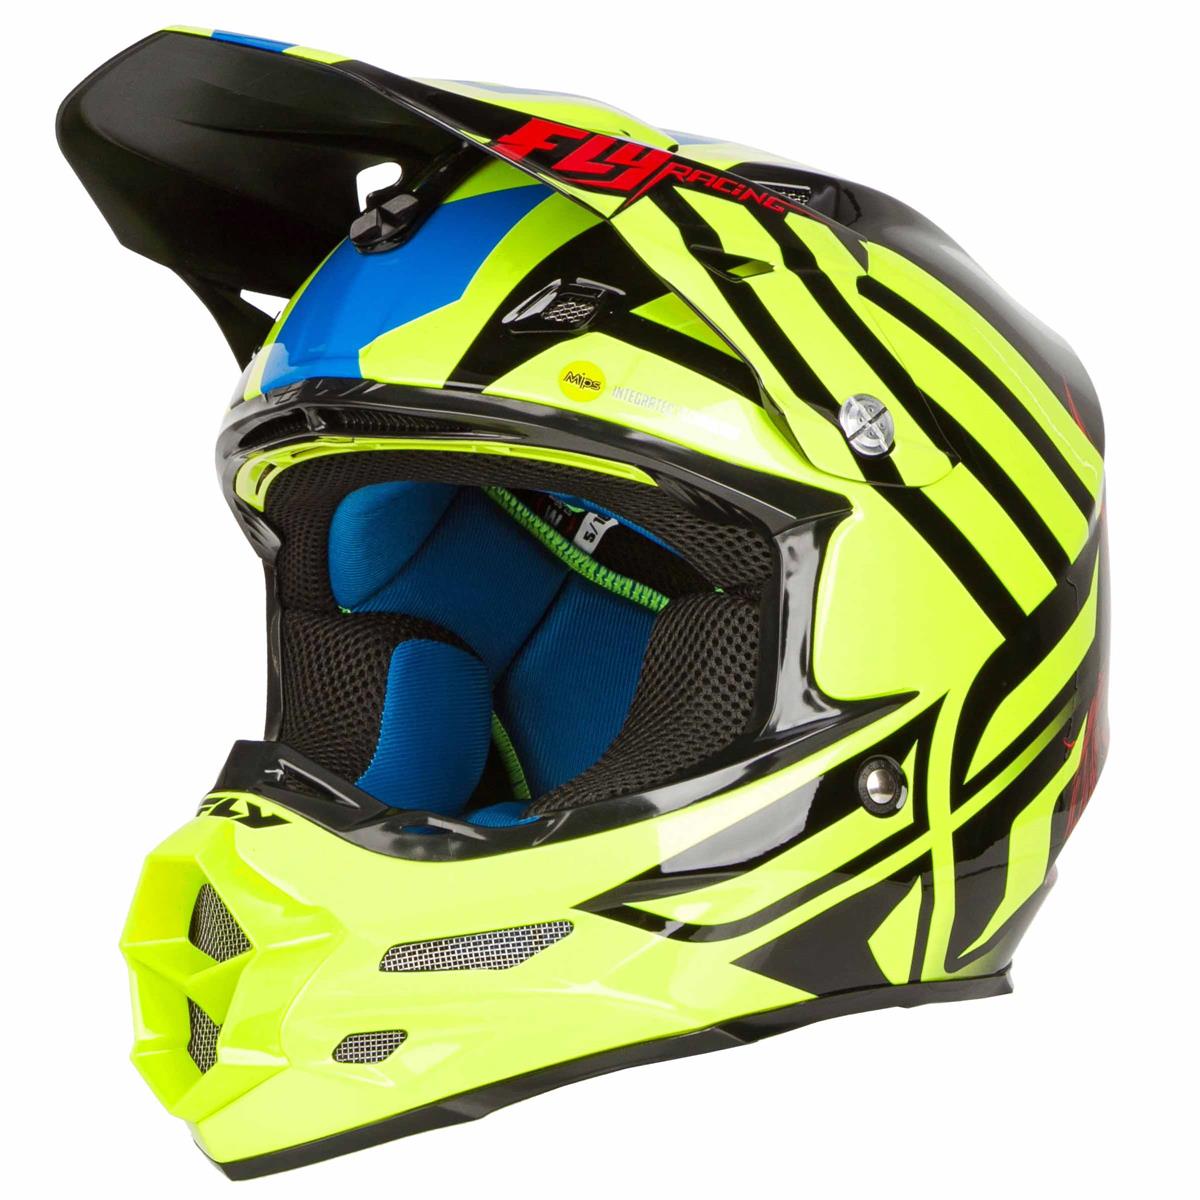 Fly Racing Motocross-Helm F2 Carbon MIPS Weston Peick Replica - Hi-Vis/Rot/Blau